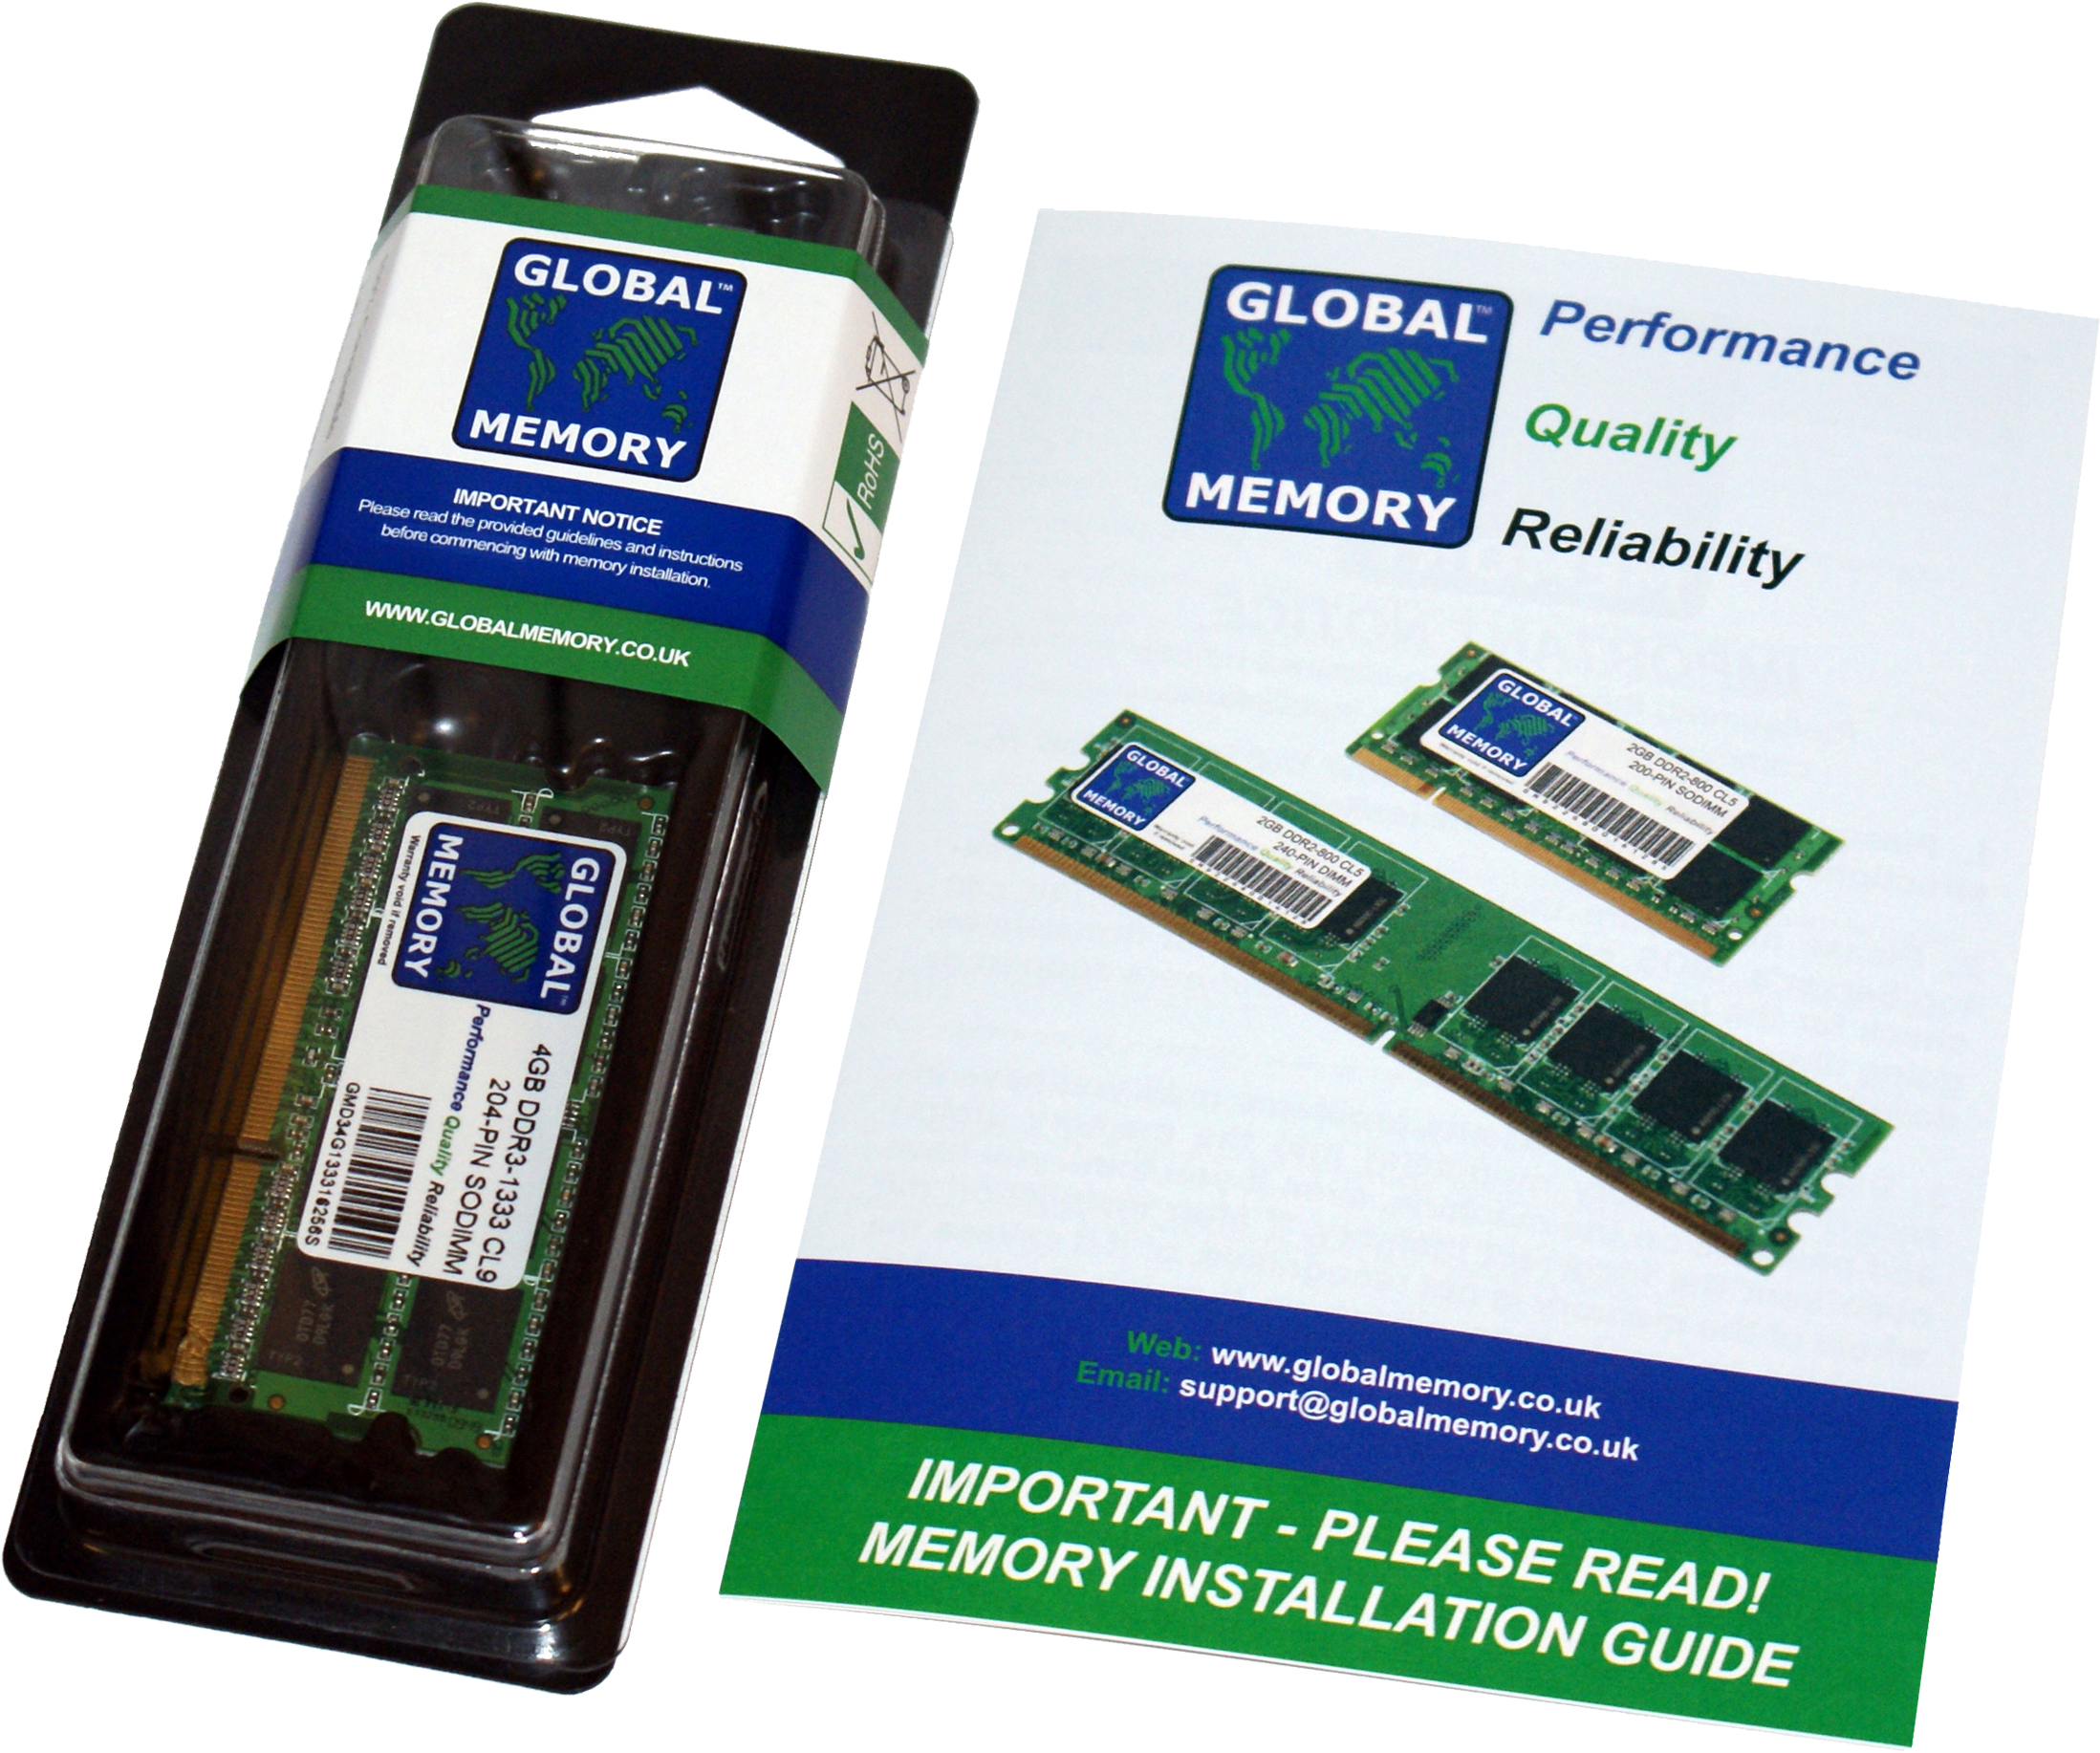 8GB DDR4 2400MHz PC4-19200 260-PIN SODIMM MEMORY RAM FOR INTEL IMAC RETINA 5K 27 INCH (2017)